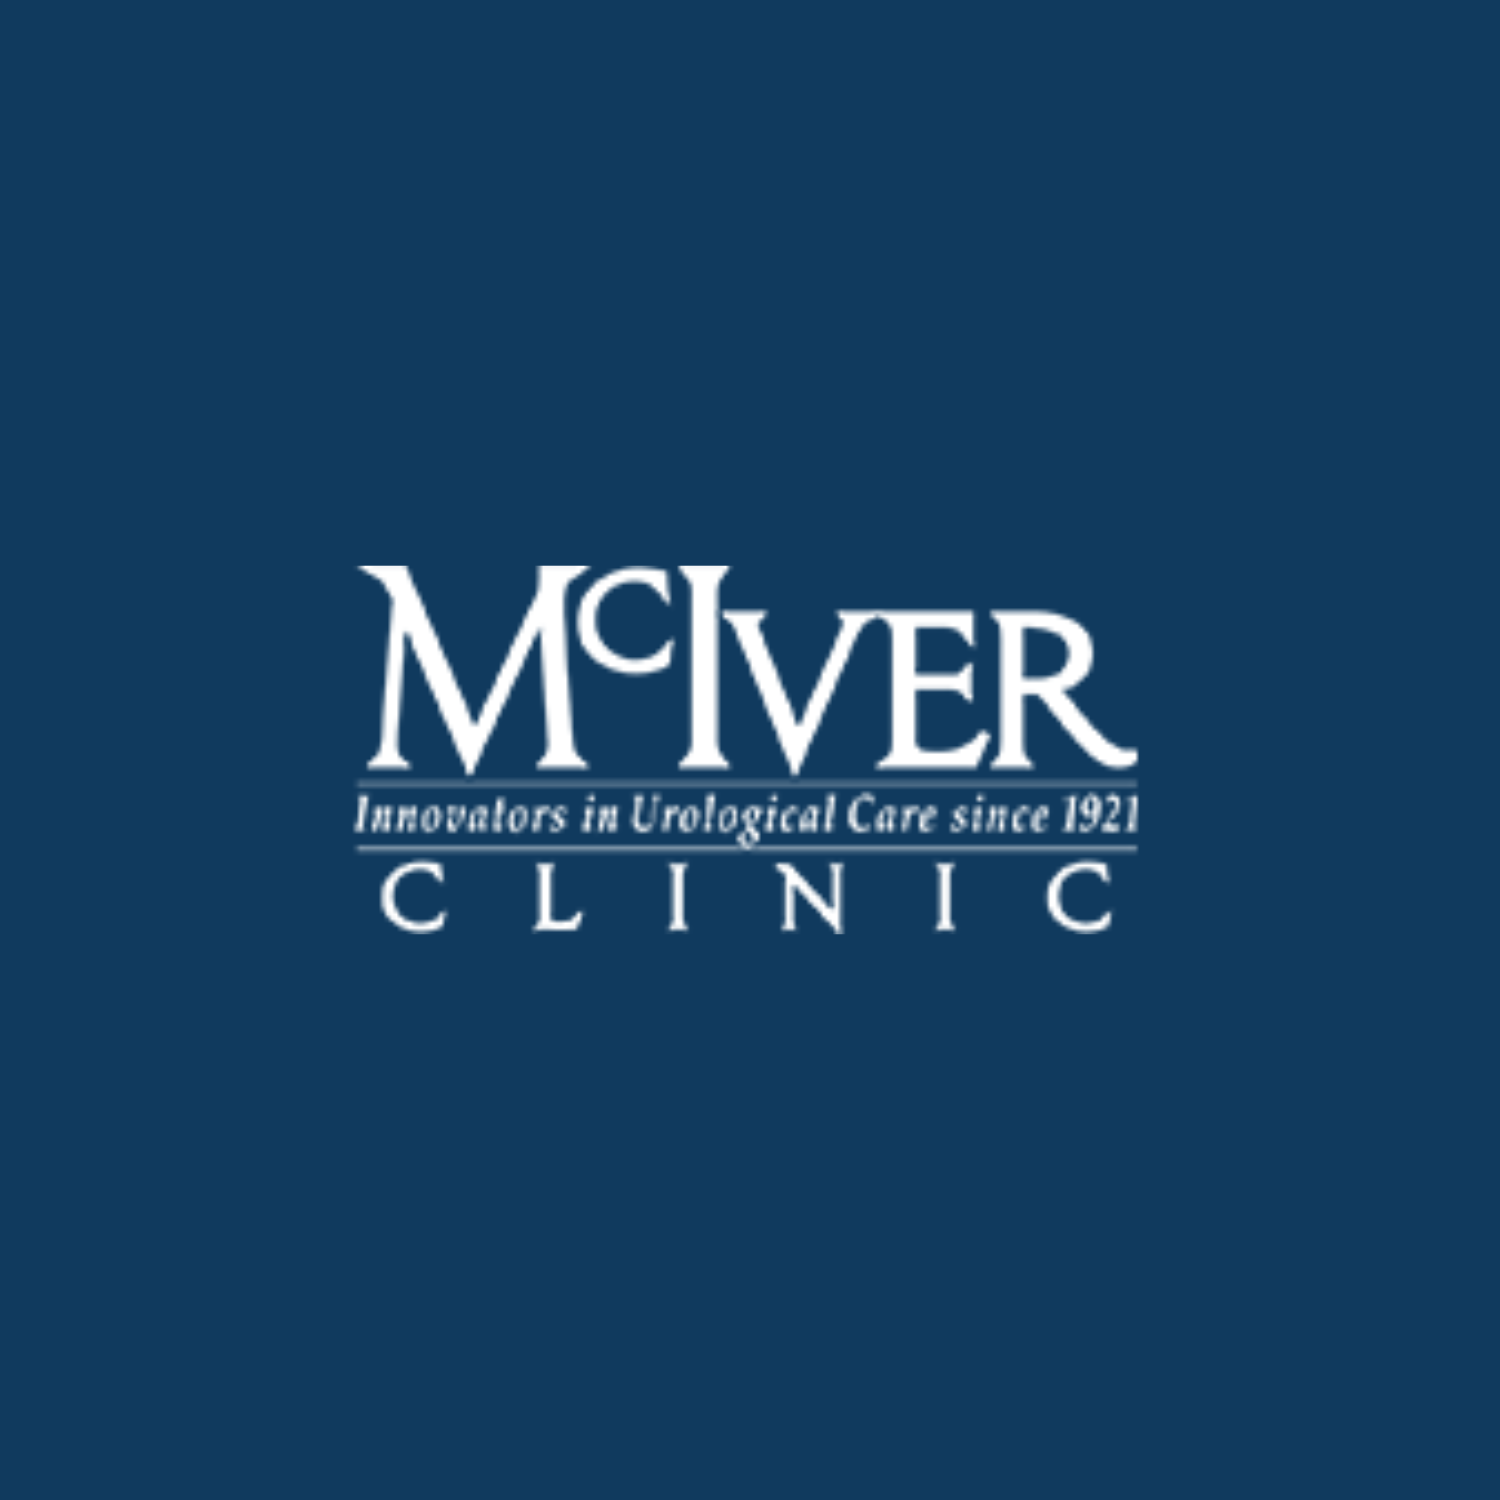 Mciver Clinic - Jacksonville, FL 32204 - (904)355-6583 | ShowMeLocal.com